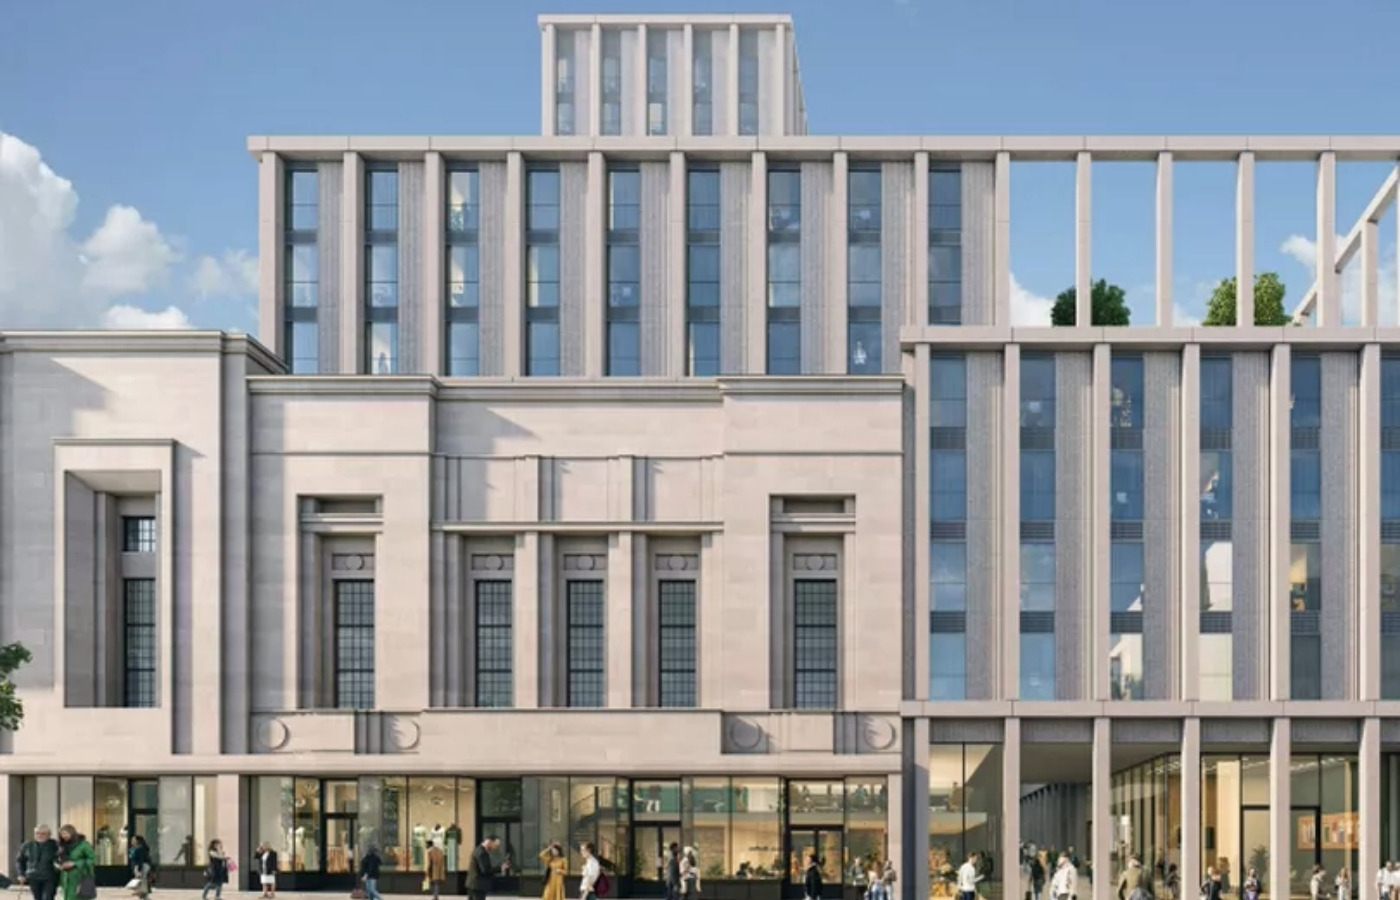 New plans to build flats on former Glasgow Sauchiehall street M&S